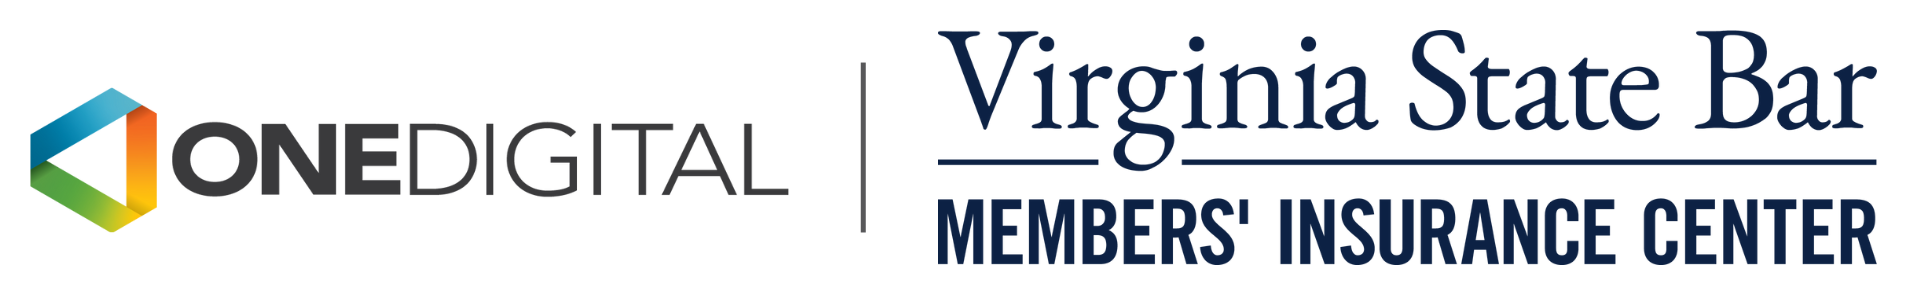 Virginia State Bar Members’ Insurance Center (VSBMIC)